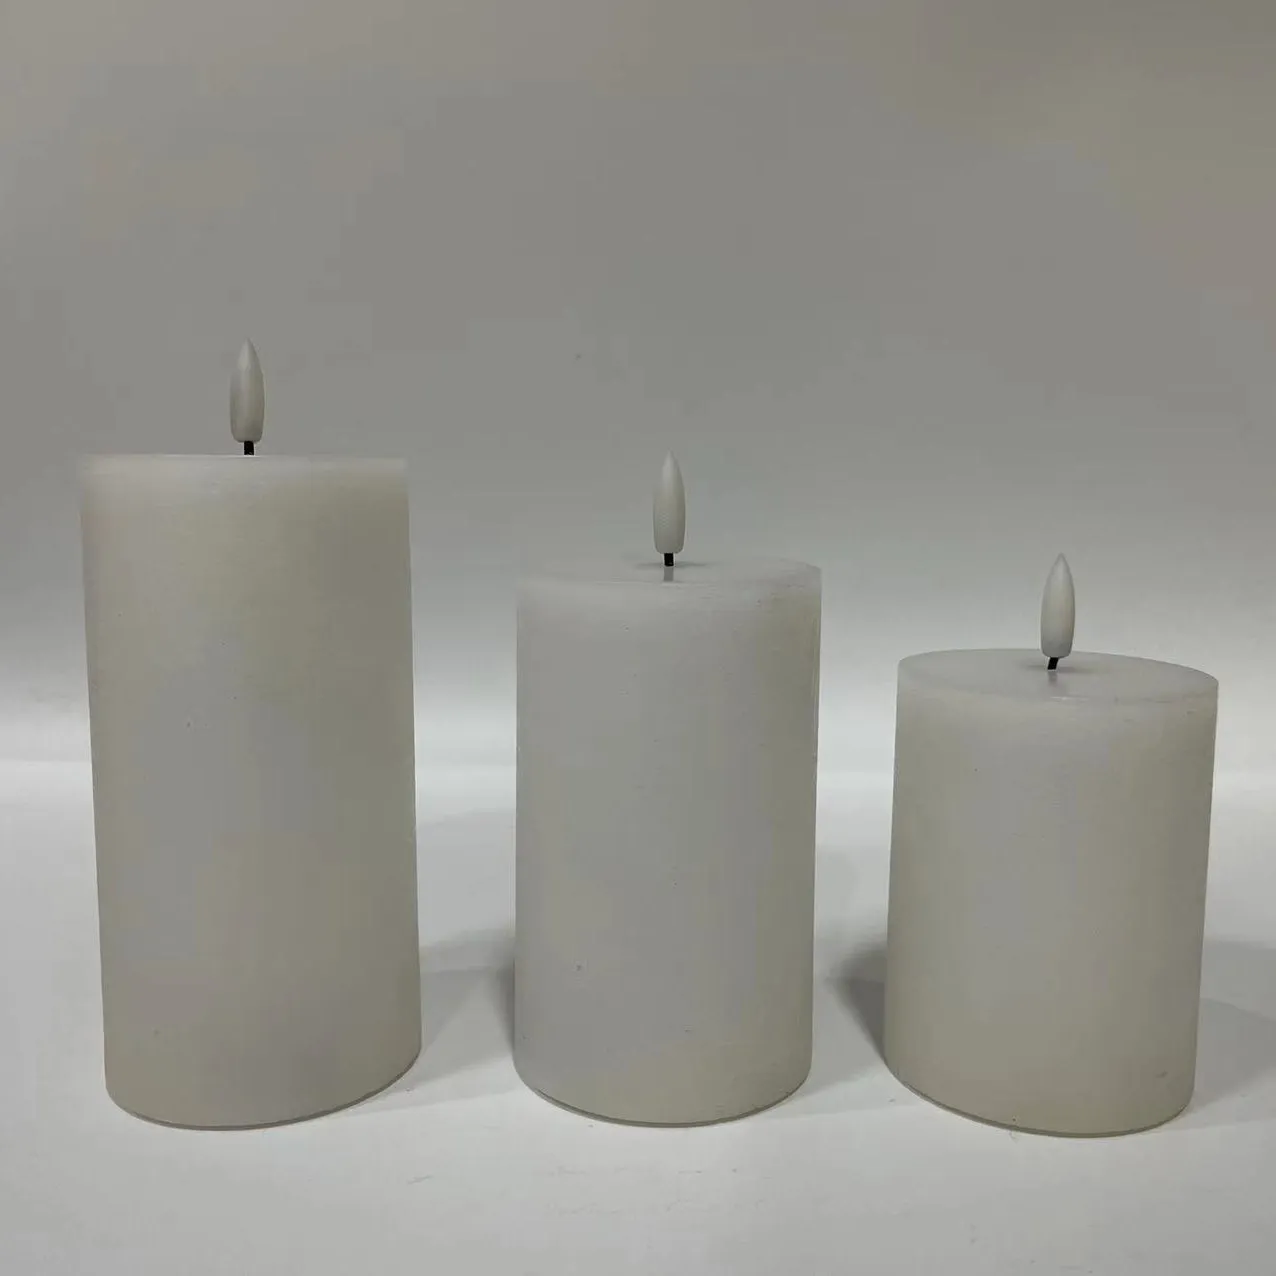 led flameless candles